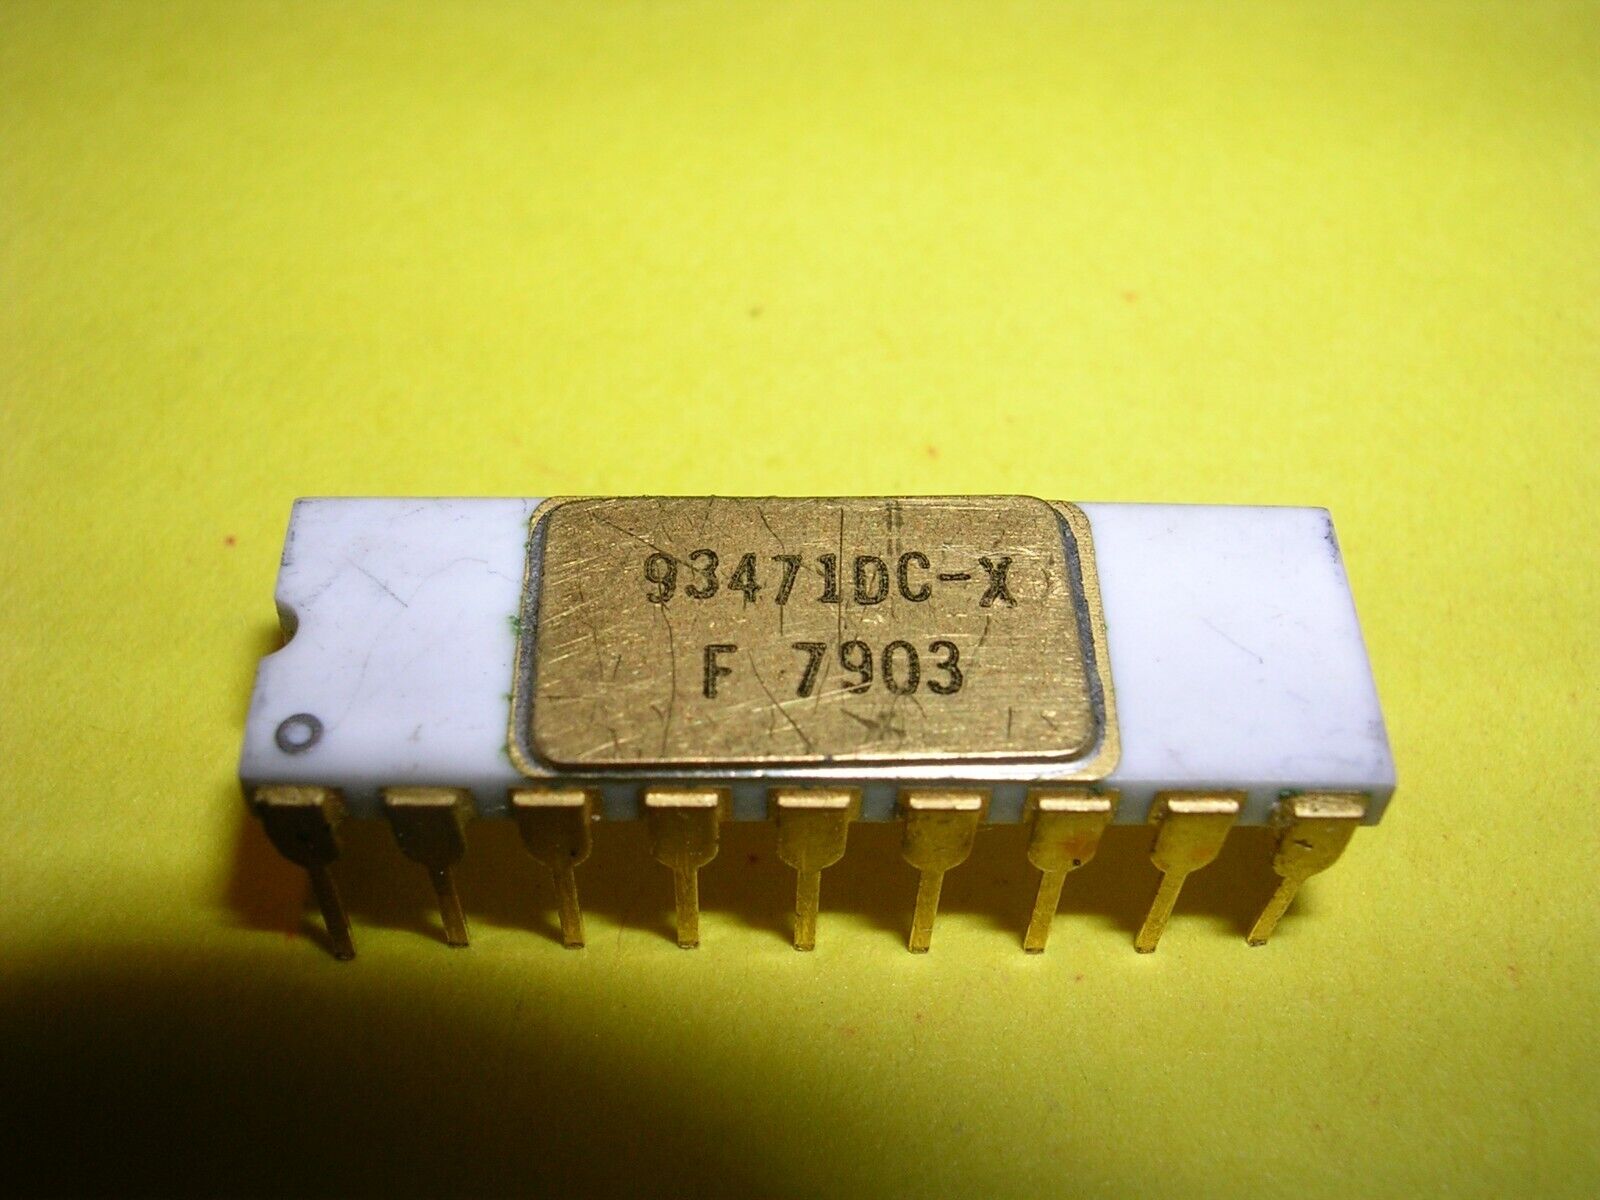 Fairchild 93471DC-X TTL Isoplanar Memory - 4096 x 1-Bit RAM